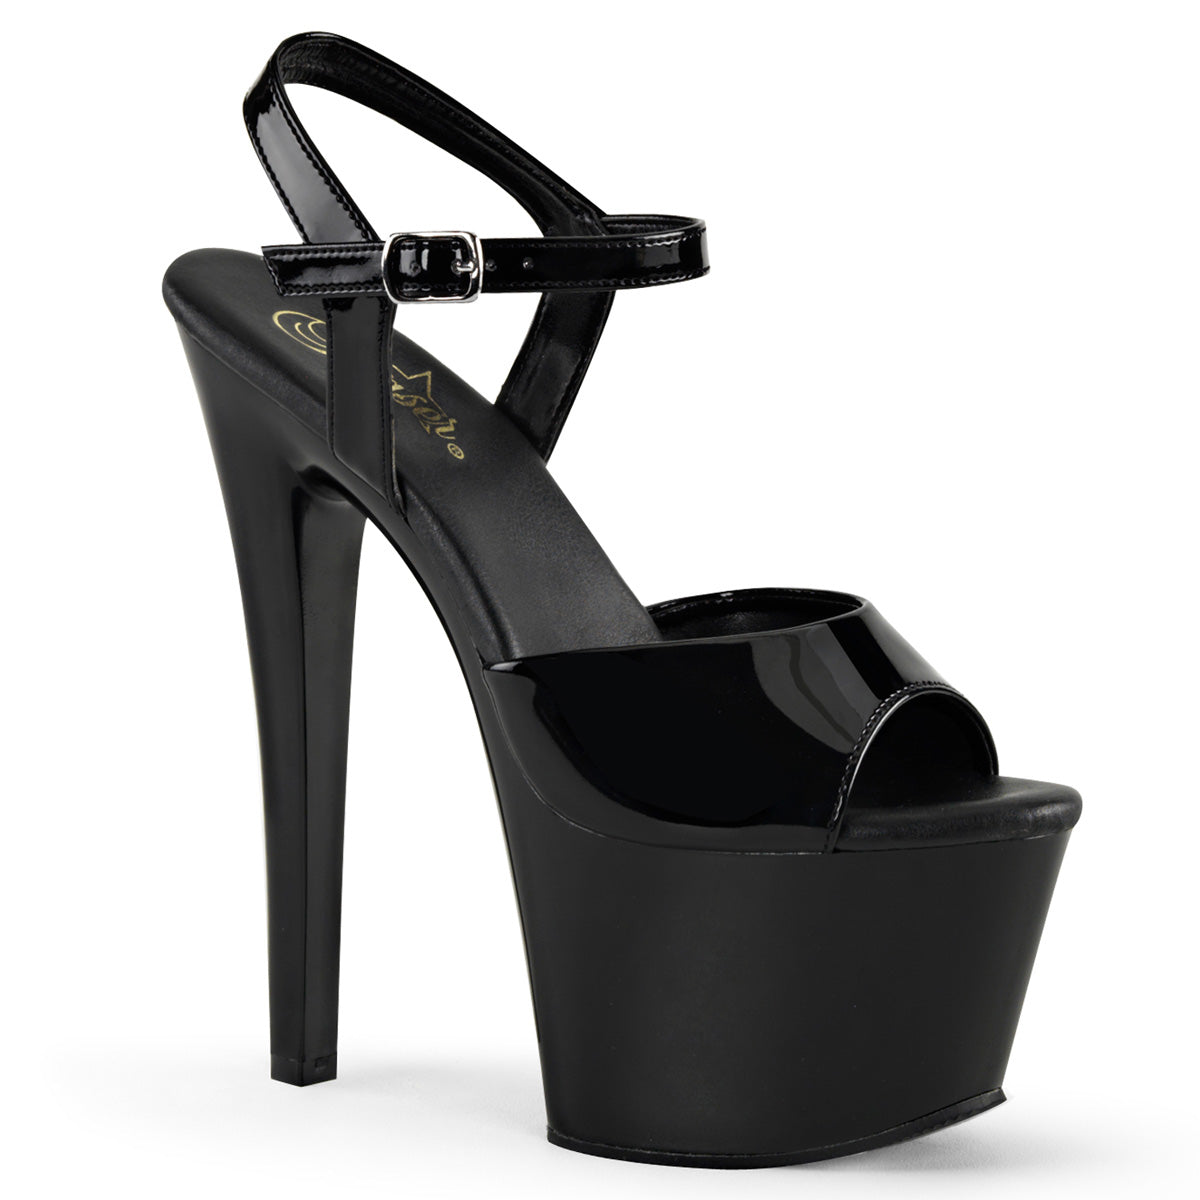 SKY-309VL Pleaser 7" Heel Black Patent Pole Dancing Platform-Pleaser- Sexy Shoes